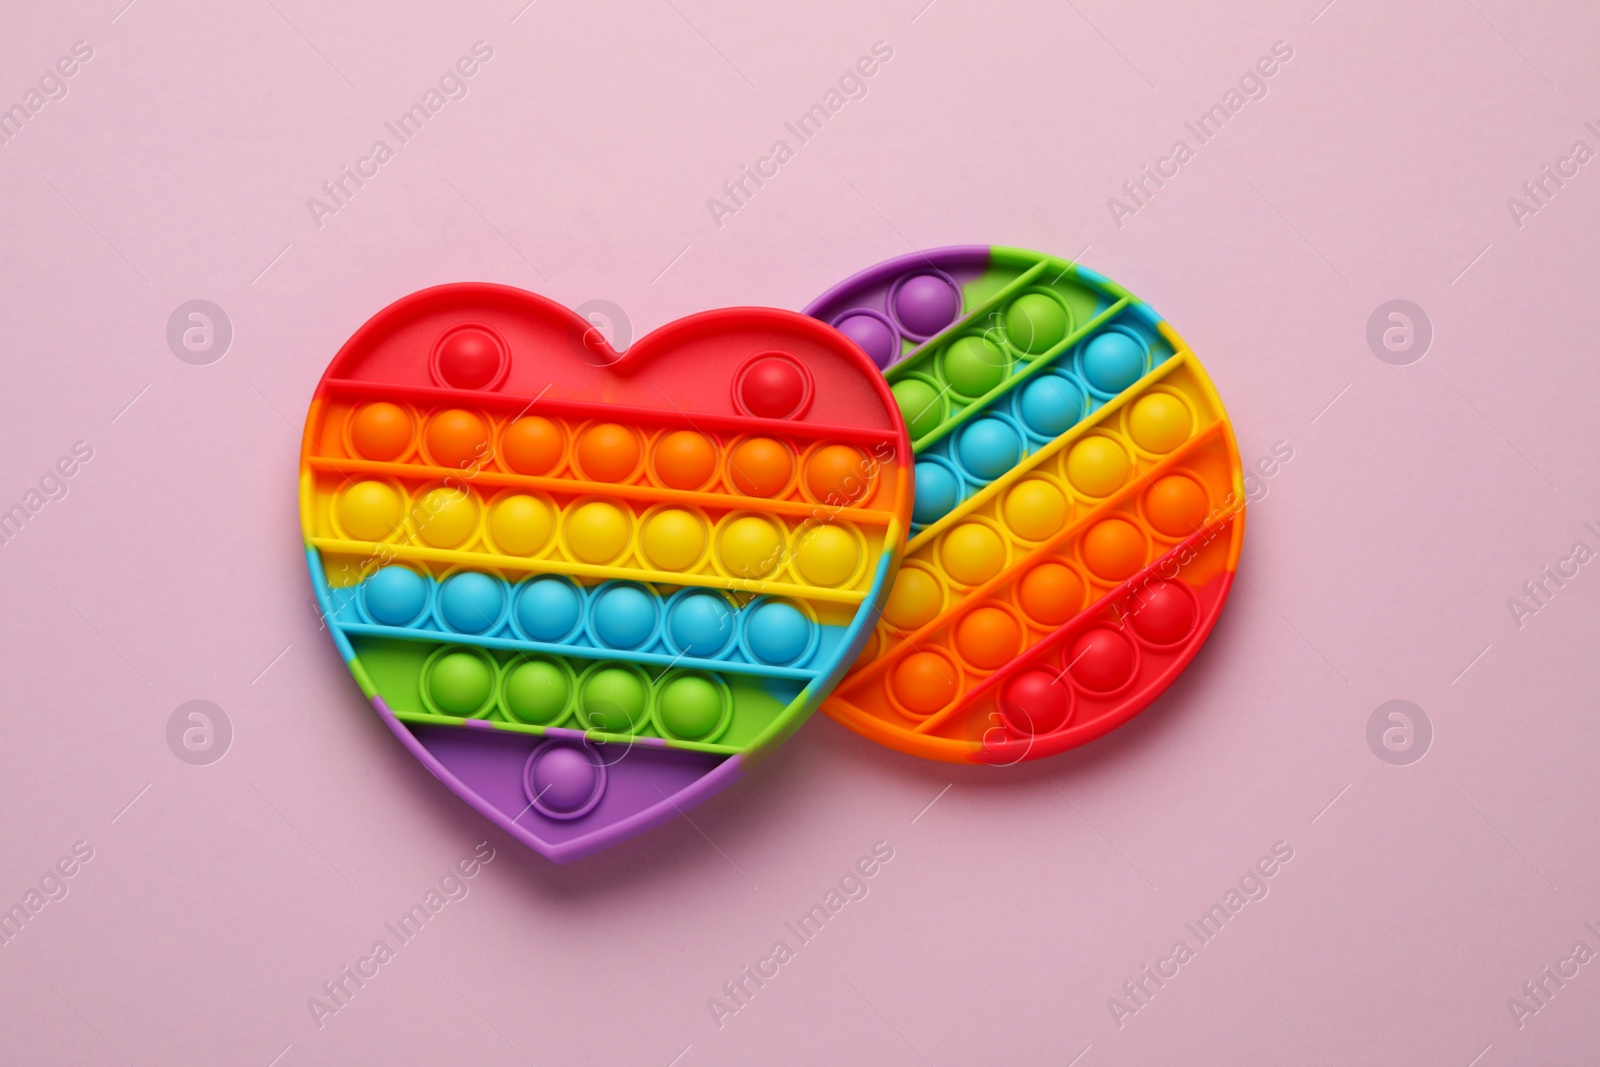 Photo of Rainbow pop it fidget toys on lilac background, flat lay